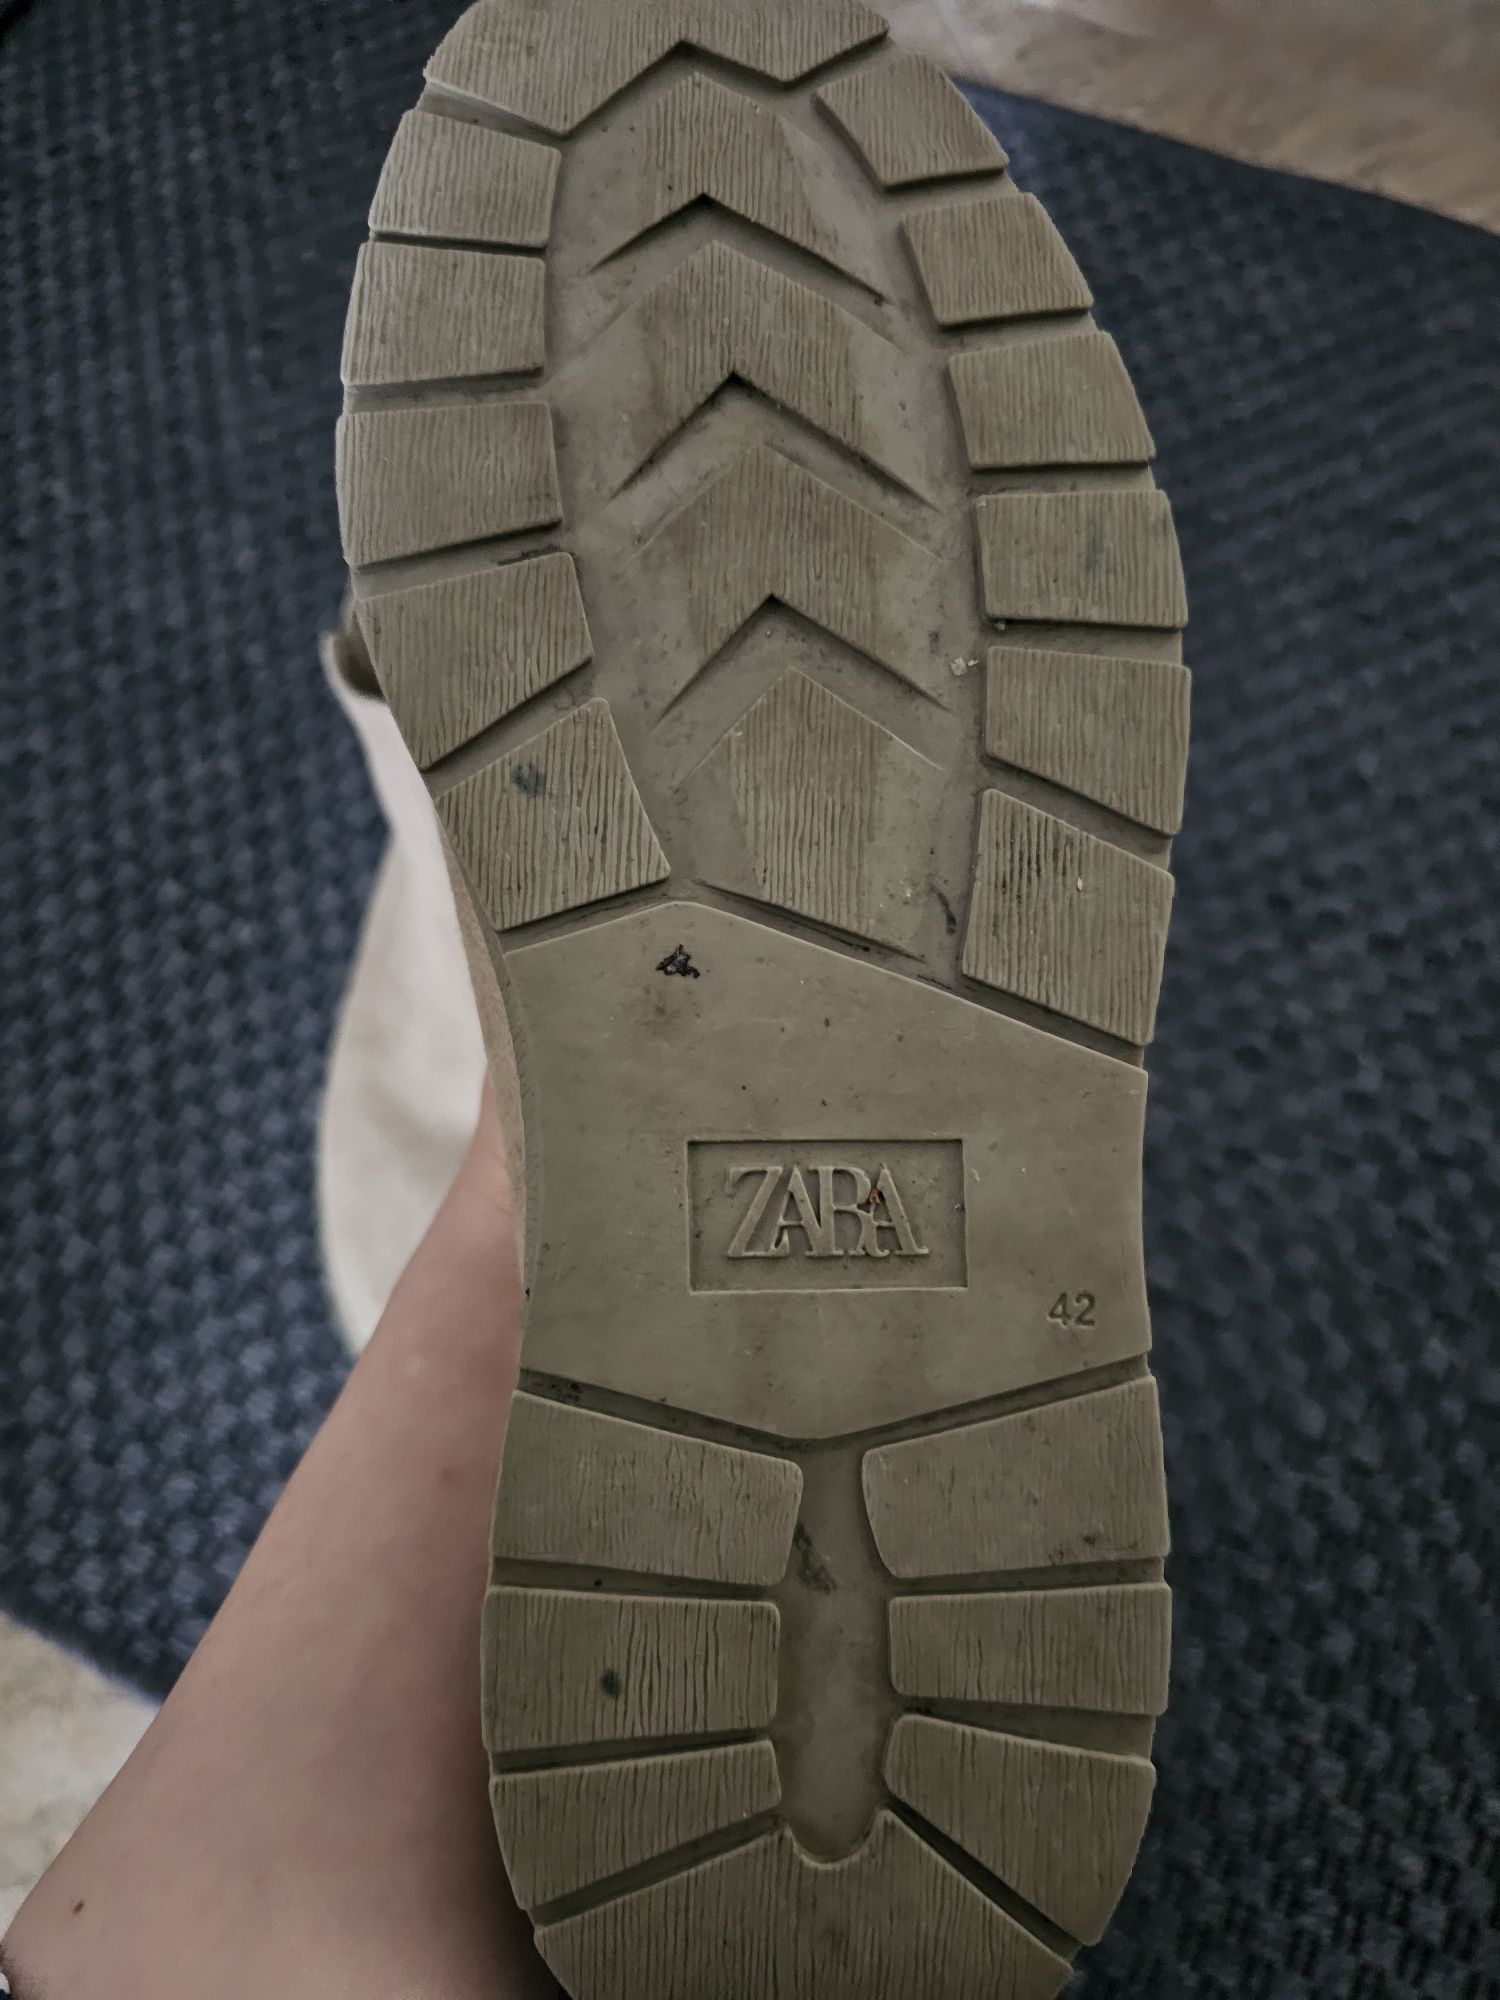 Pantofi /ghete bărbați Zara
 primavara/toamna
Marime 42
In stare foart